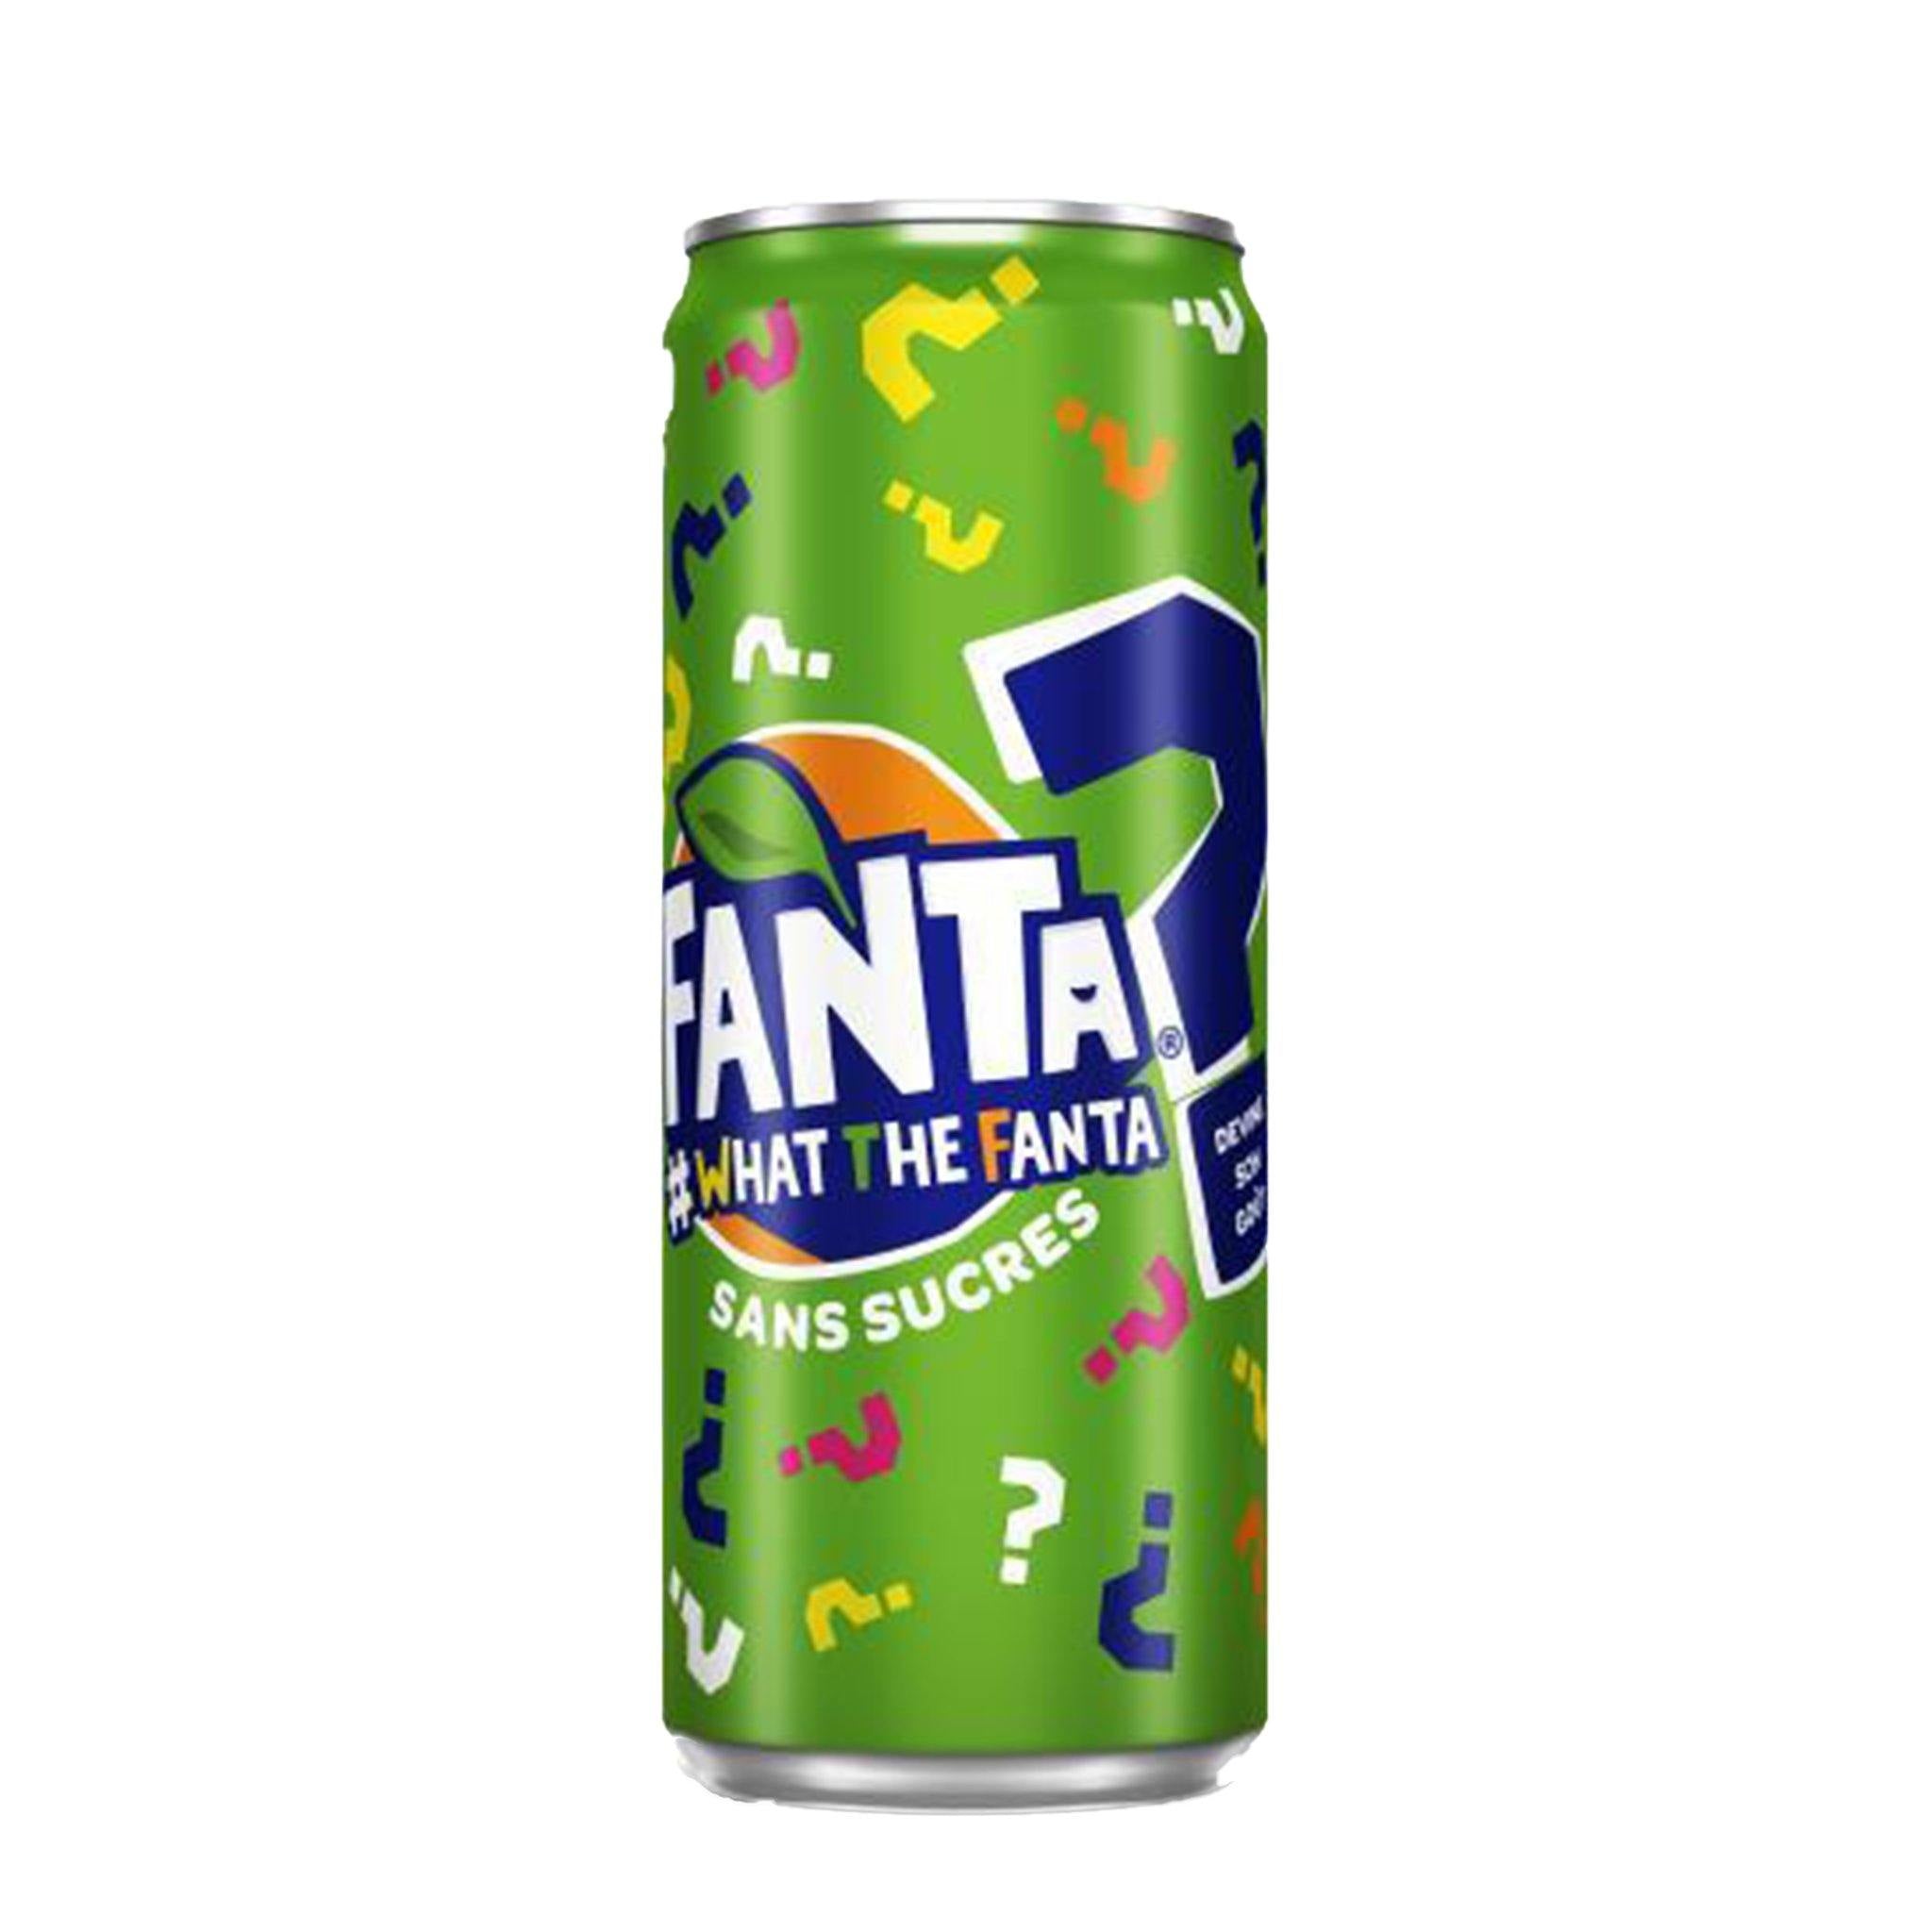 Fanta WTF "What The Fanta" - France - Sweet Exotics